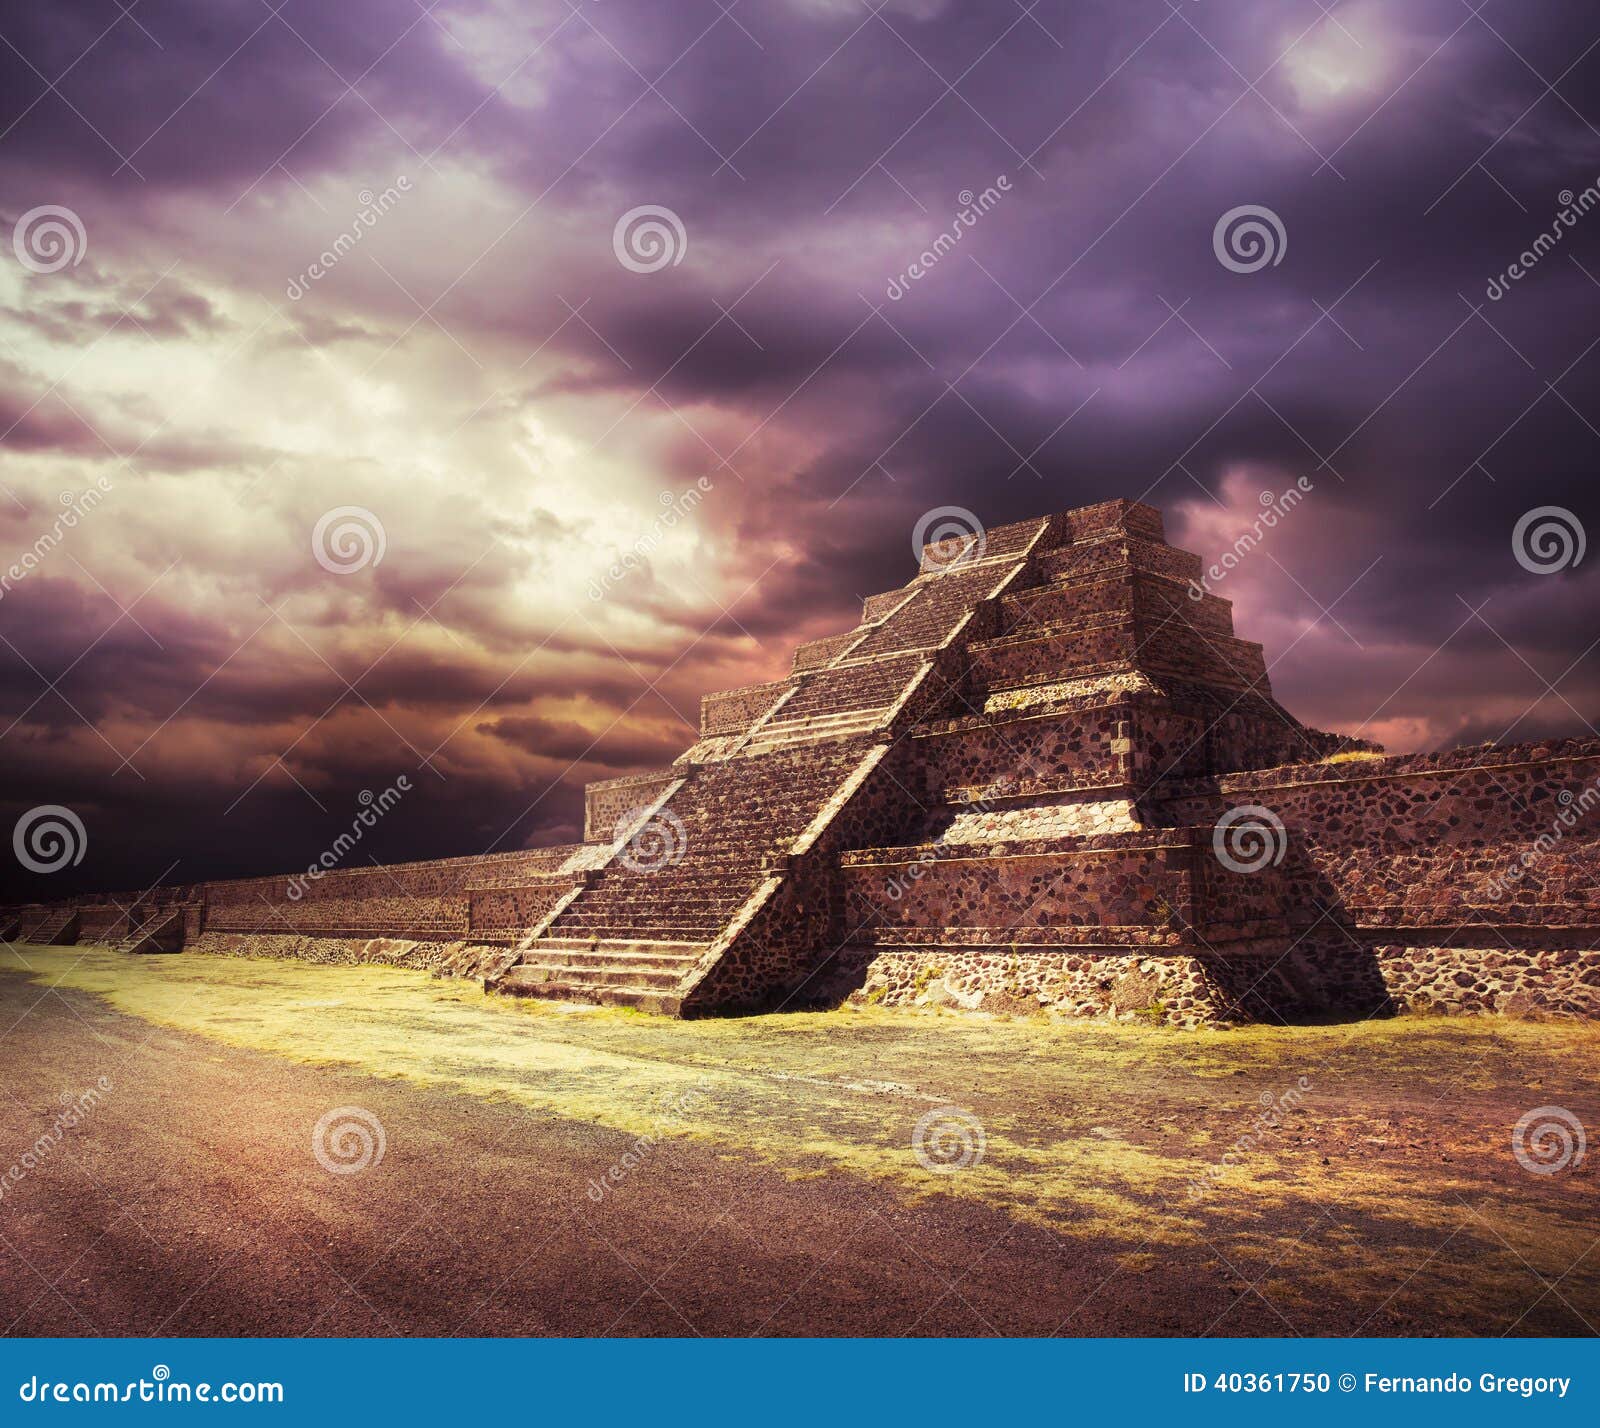 photo composite of aztec pyramid, mexico